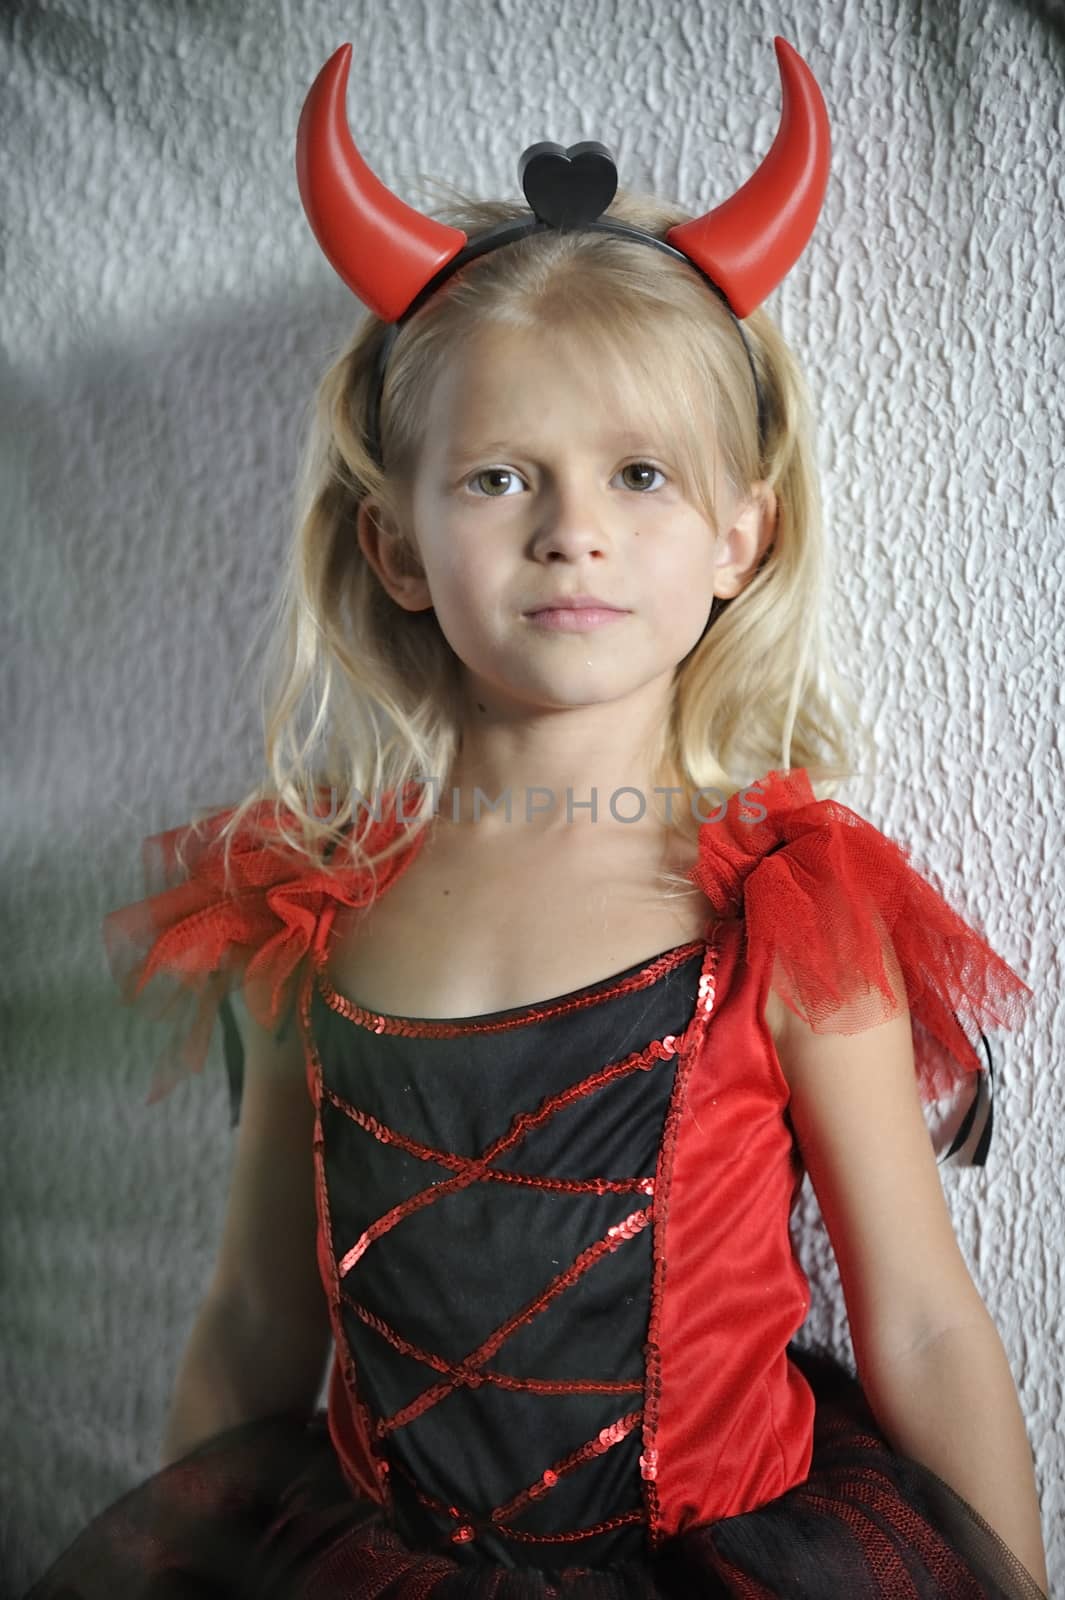 Little girl in Halloween costume. by kertis